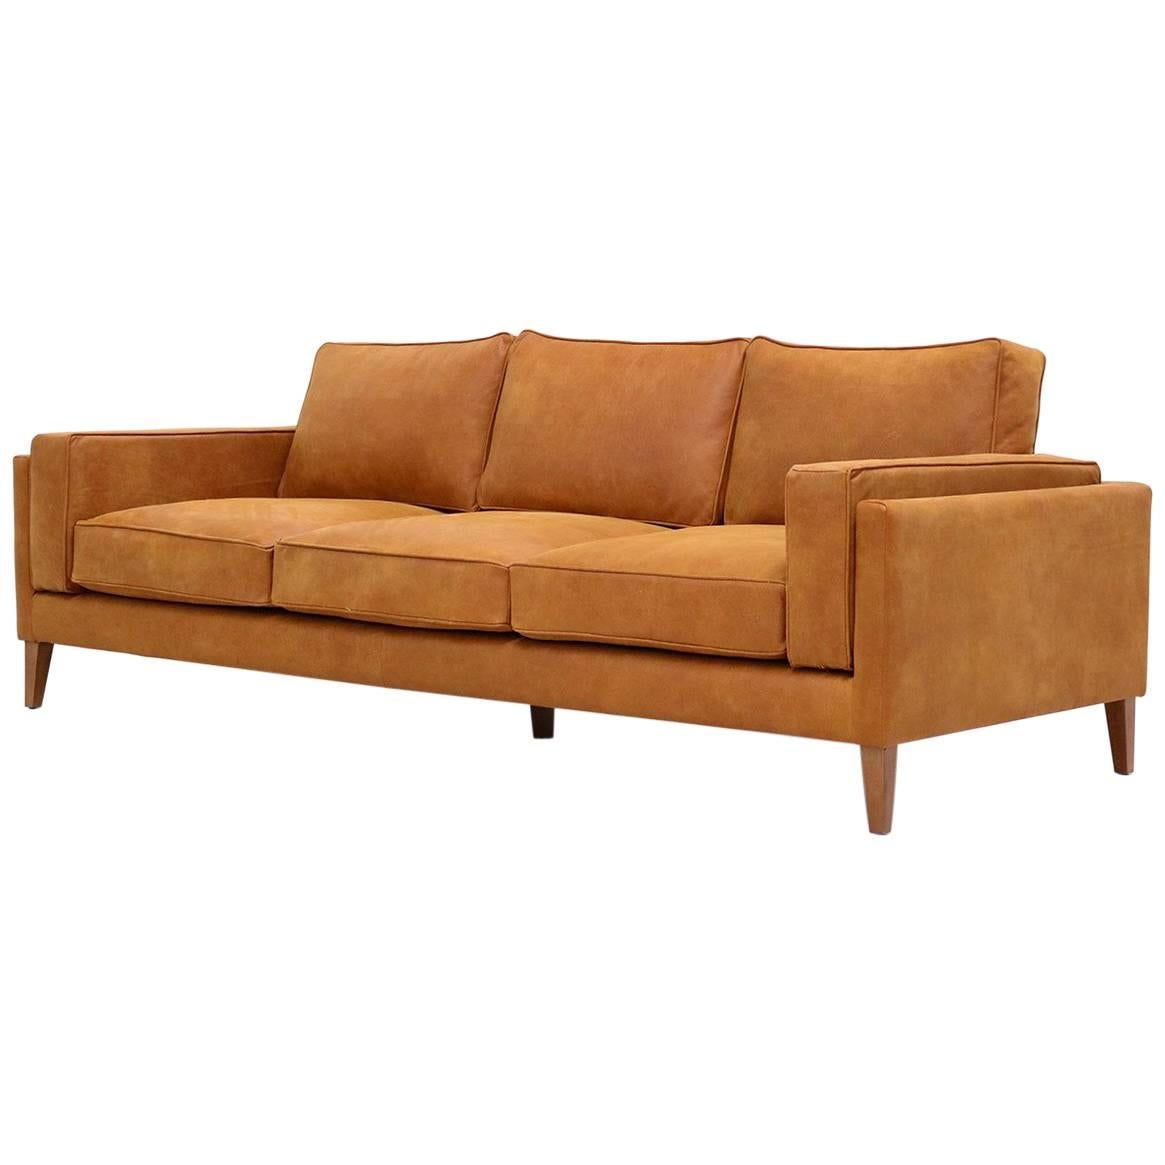 Danish Midcentury Style Three-Seat Leather Sofa Coyoacan